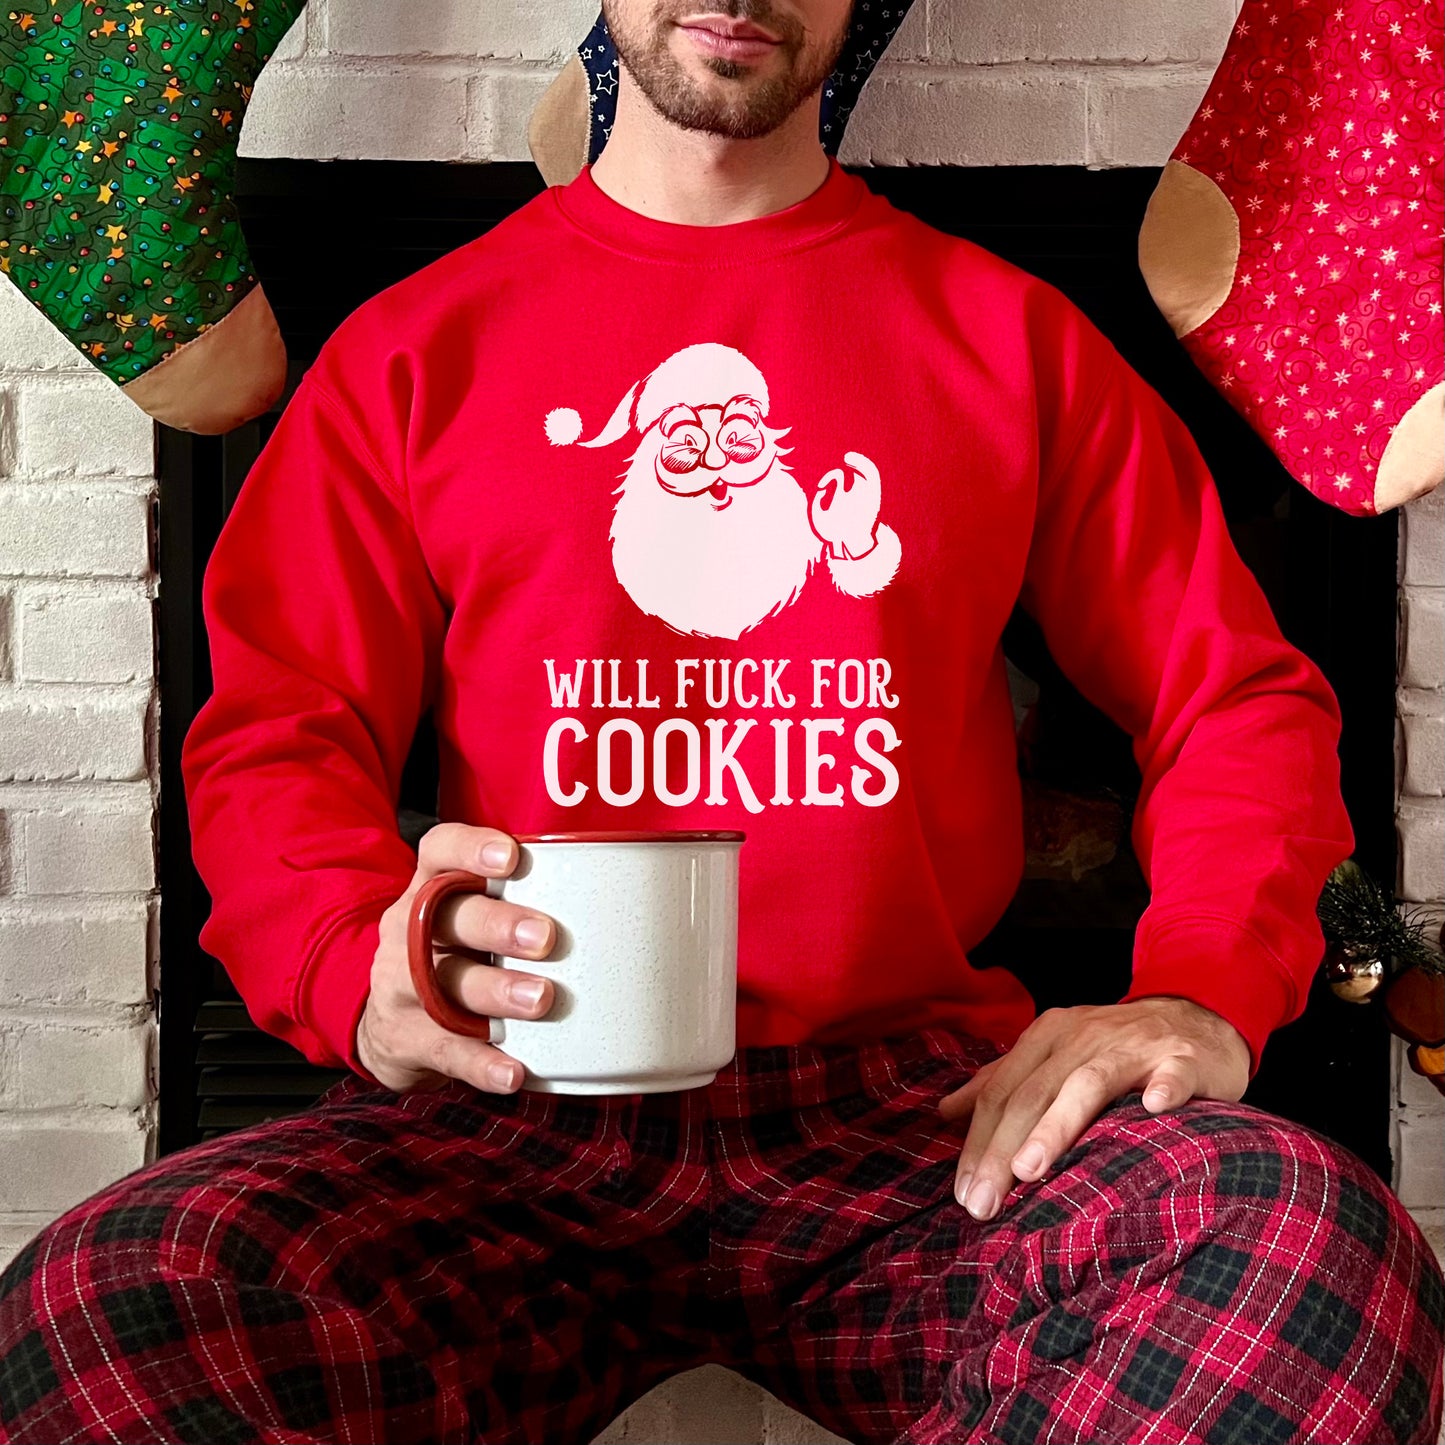 Will F**k For Cookies JH030 Rude Funny Naughty Christmas Sweatshirt Jumper Sweater | Joke Christmas Jumper | Bad Santa